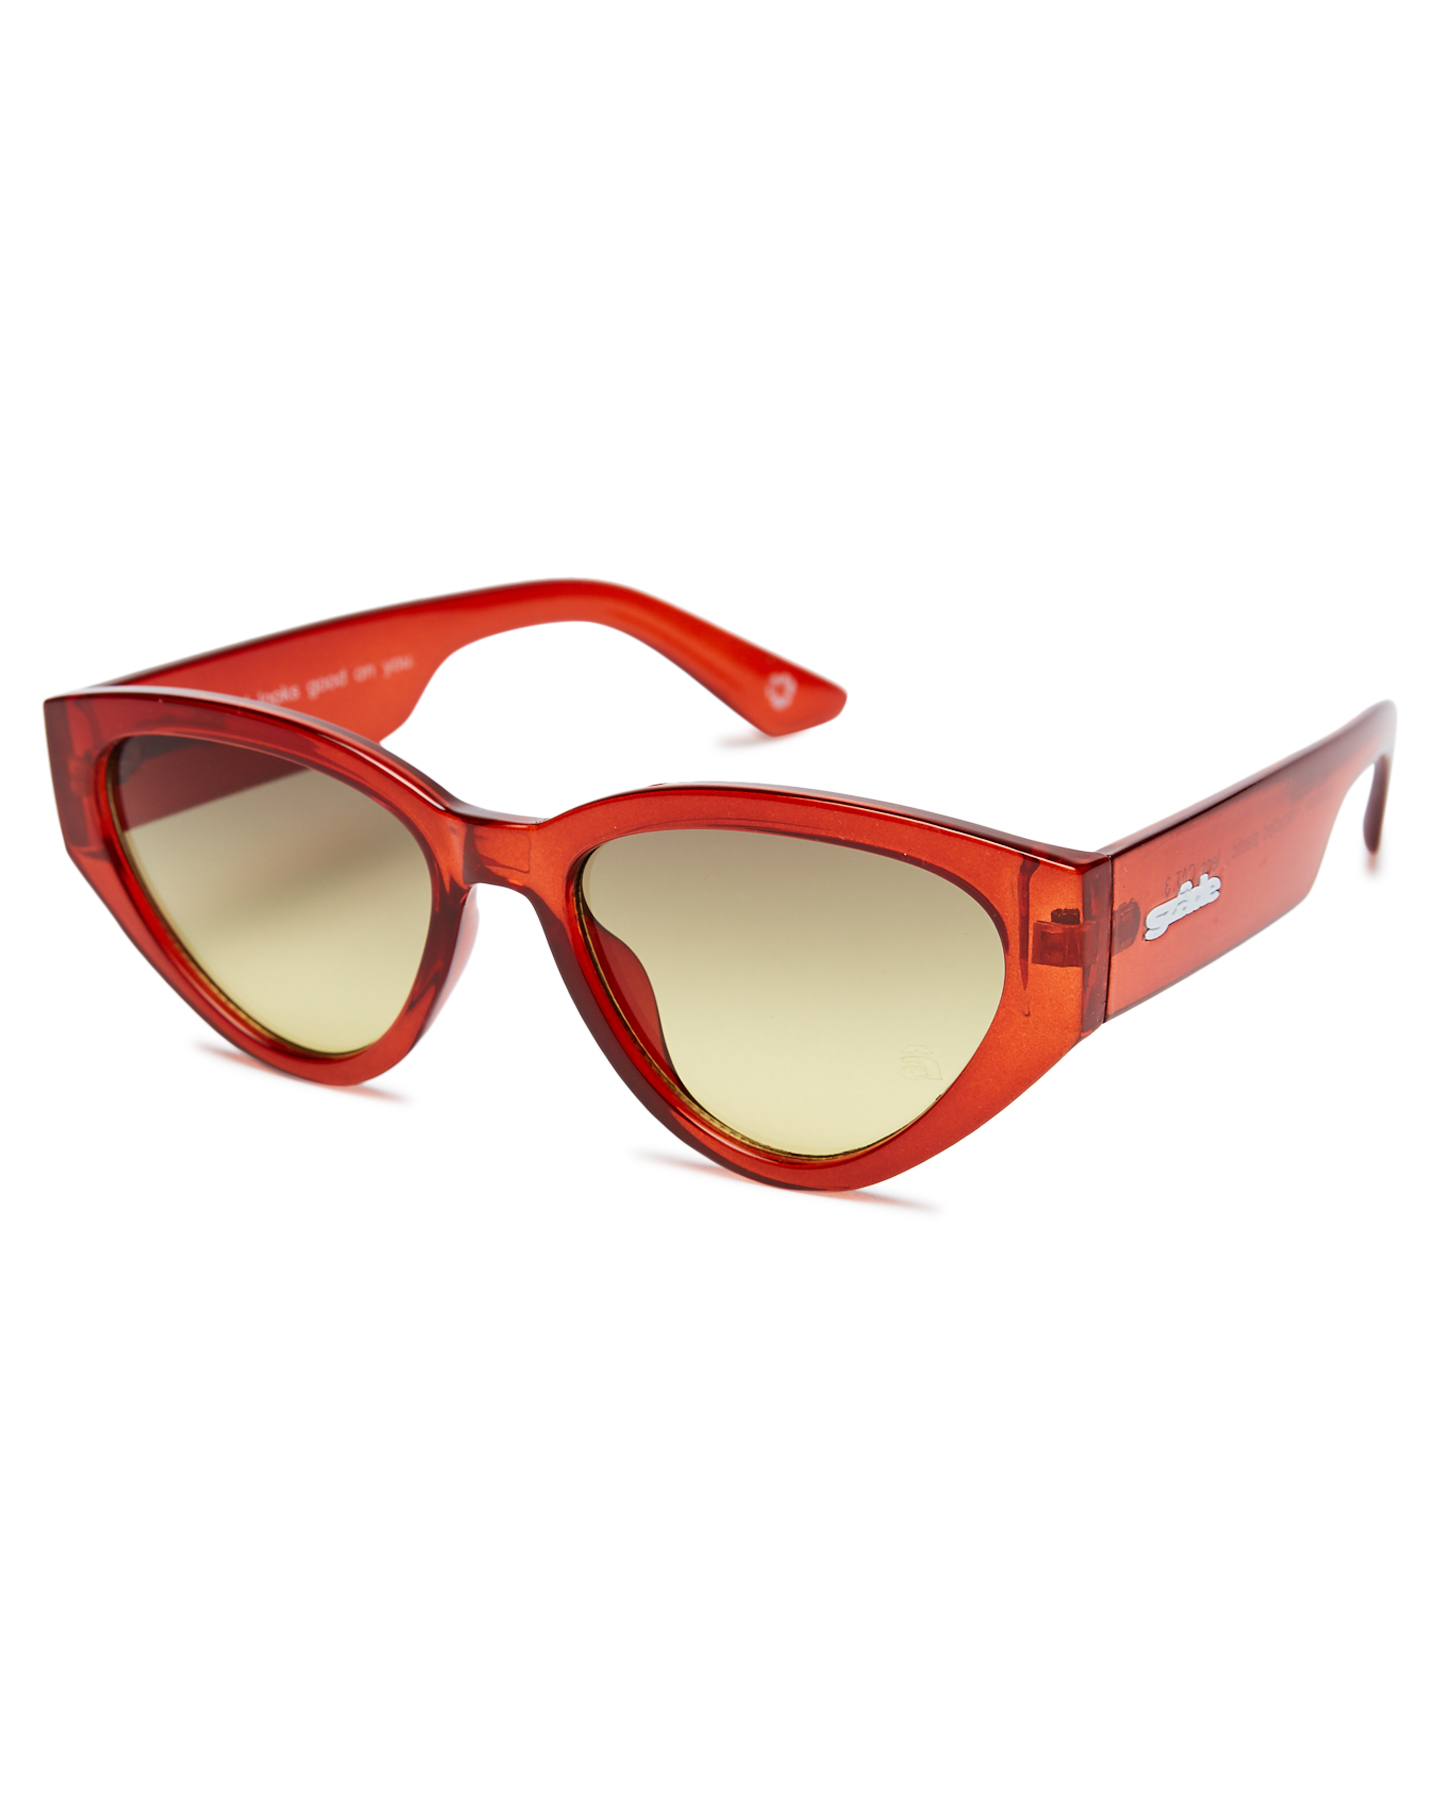 Szade Eyewear Kershaw Sunglasses - Blood Plum Yellow | SurfStitch